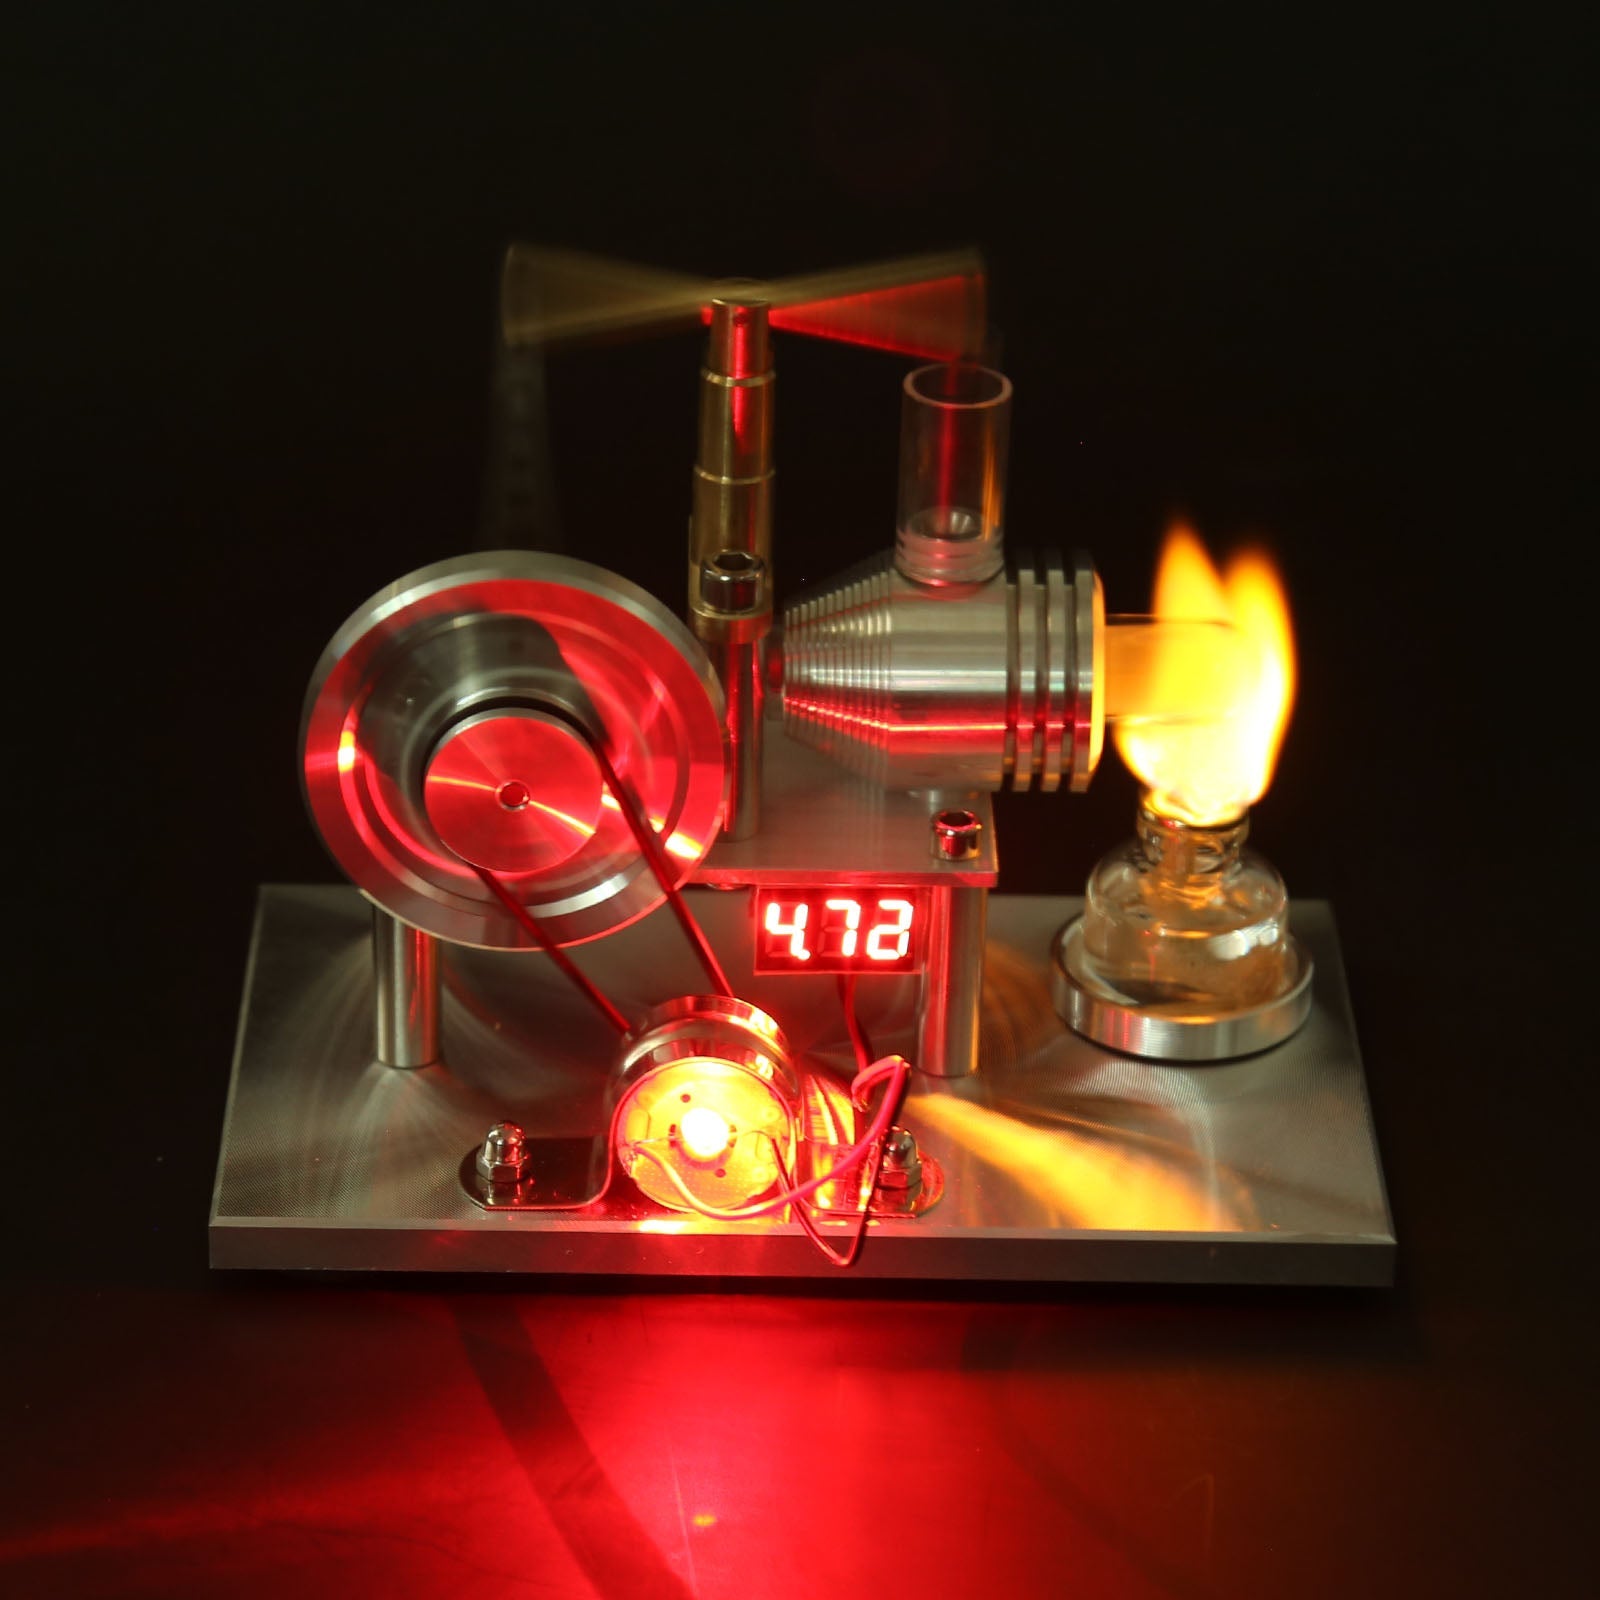 ENJOMOR Custom Balance Type Hot Air Stirling Engine Generator Model Science Experiment Educational Toy with Voltage Digital Display Meter and LED Bulb enginediyshop